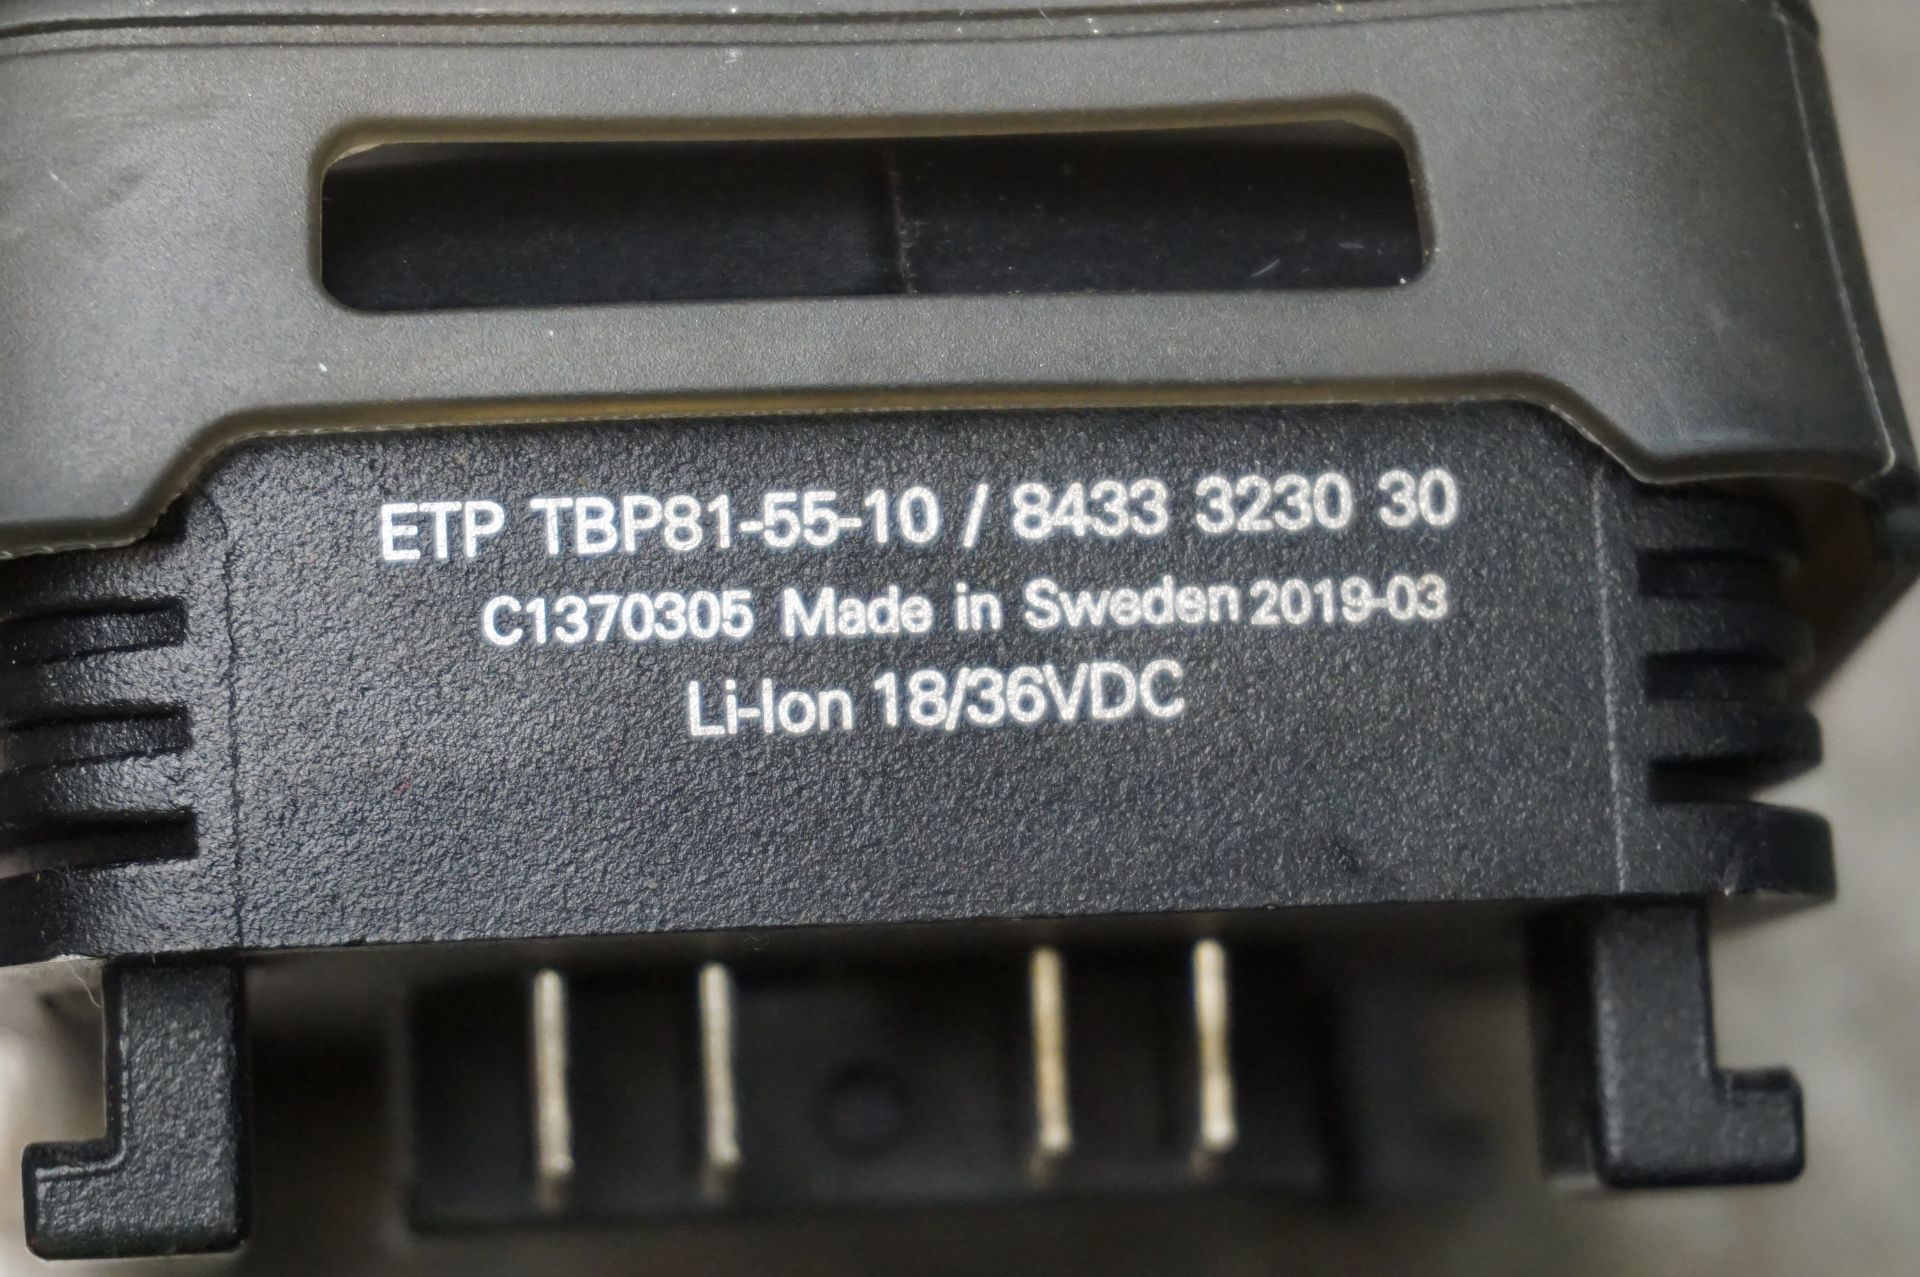 1 x Atlas Copco ETV STR31-10-10 transducerized nutrunner with 1 x Atlas Copco ETP TBP81-55-10, cordl - Image 4 of 7